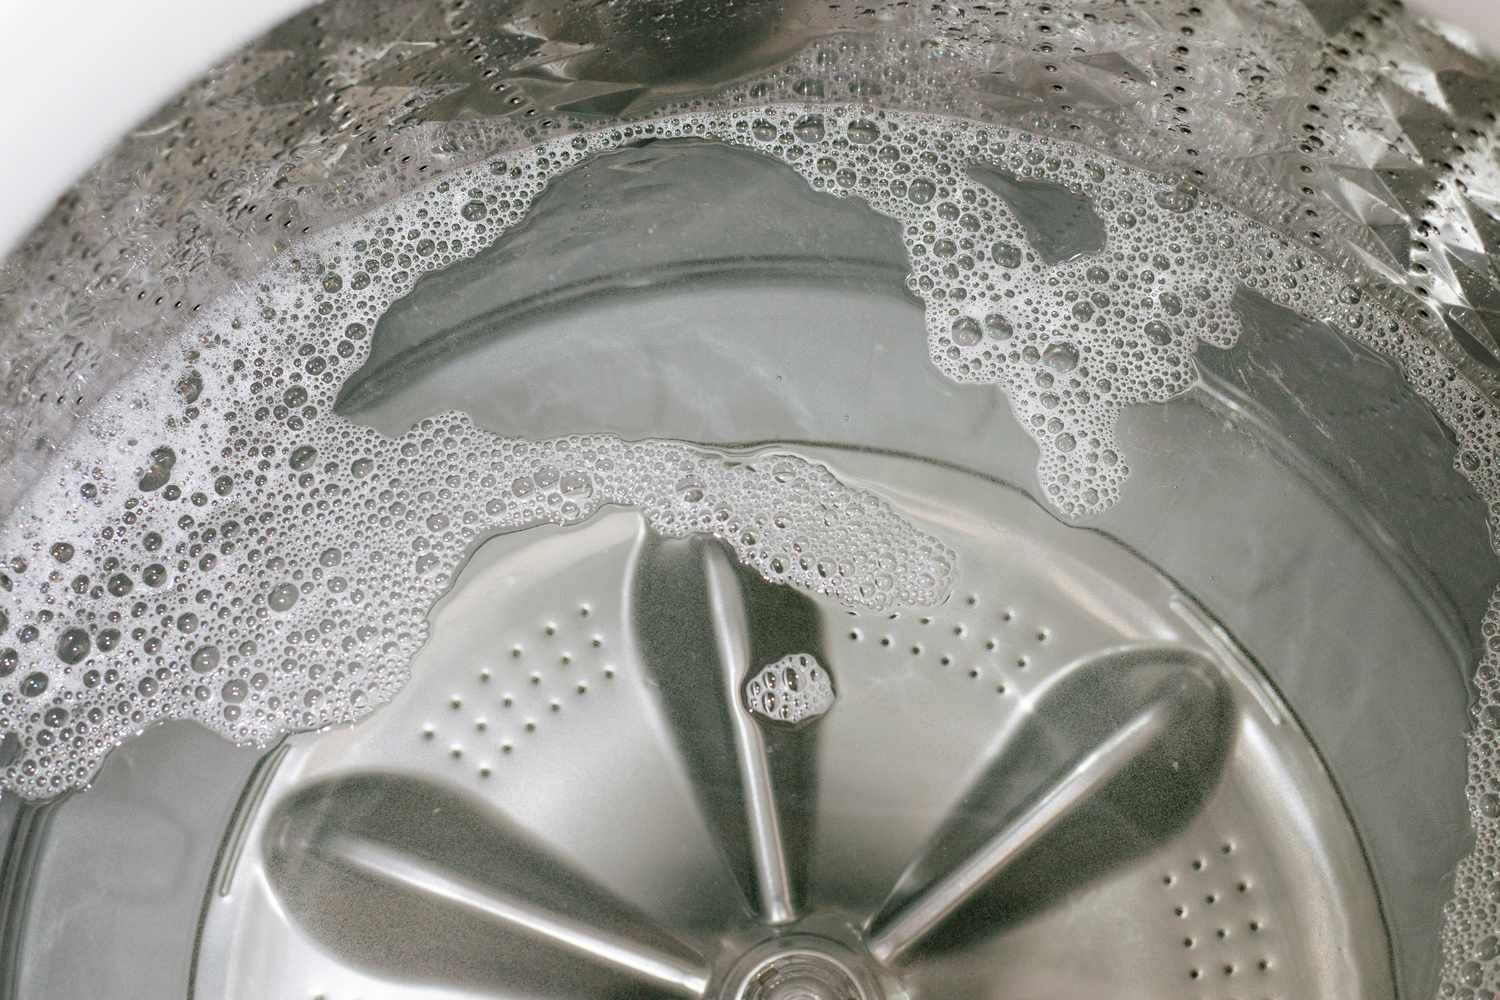 Agua jabonosa dentro de la lavadora